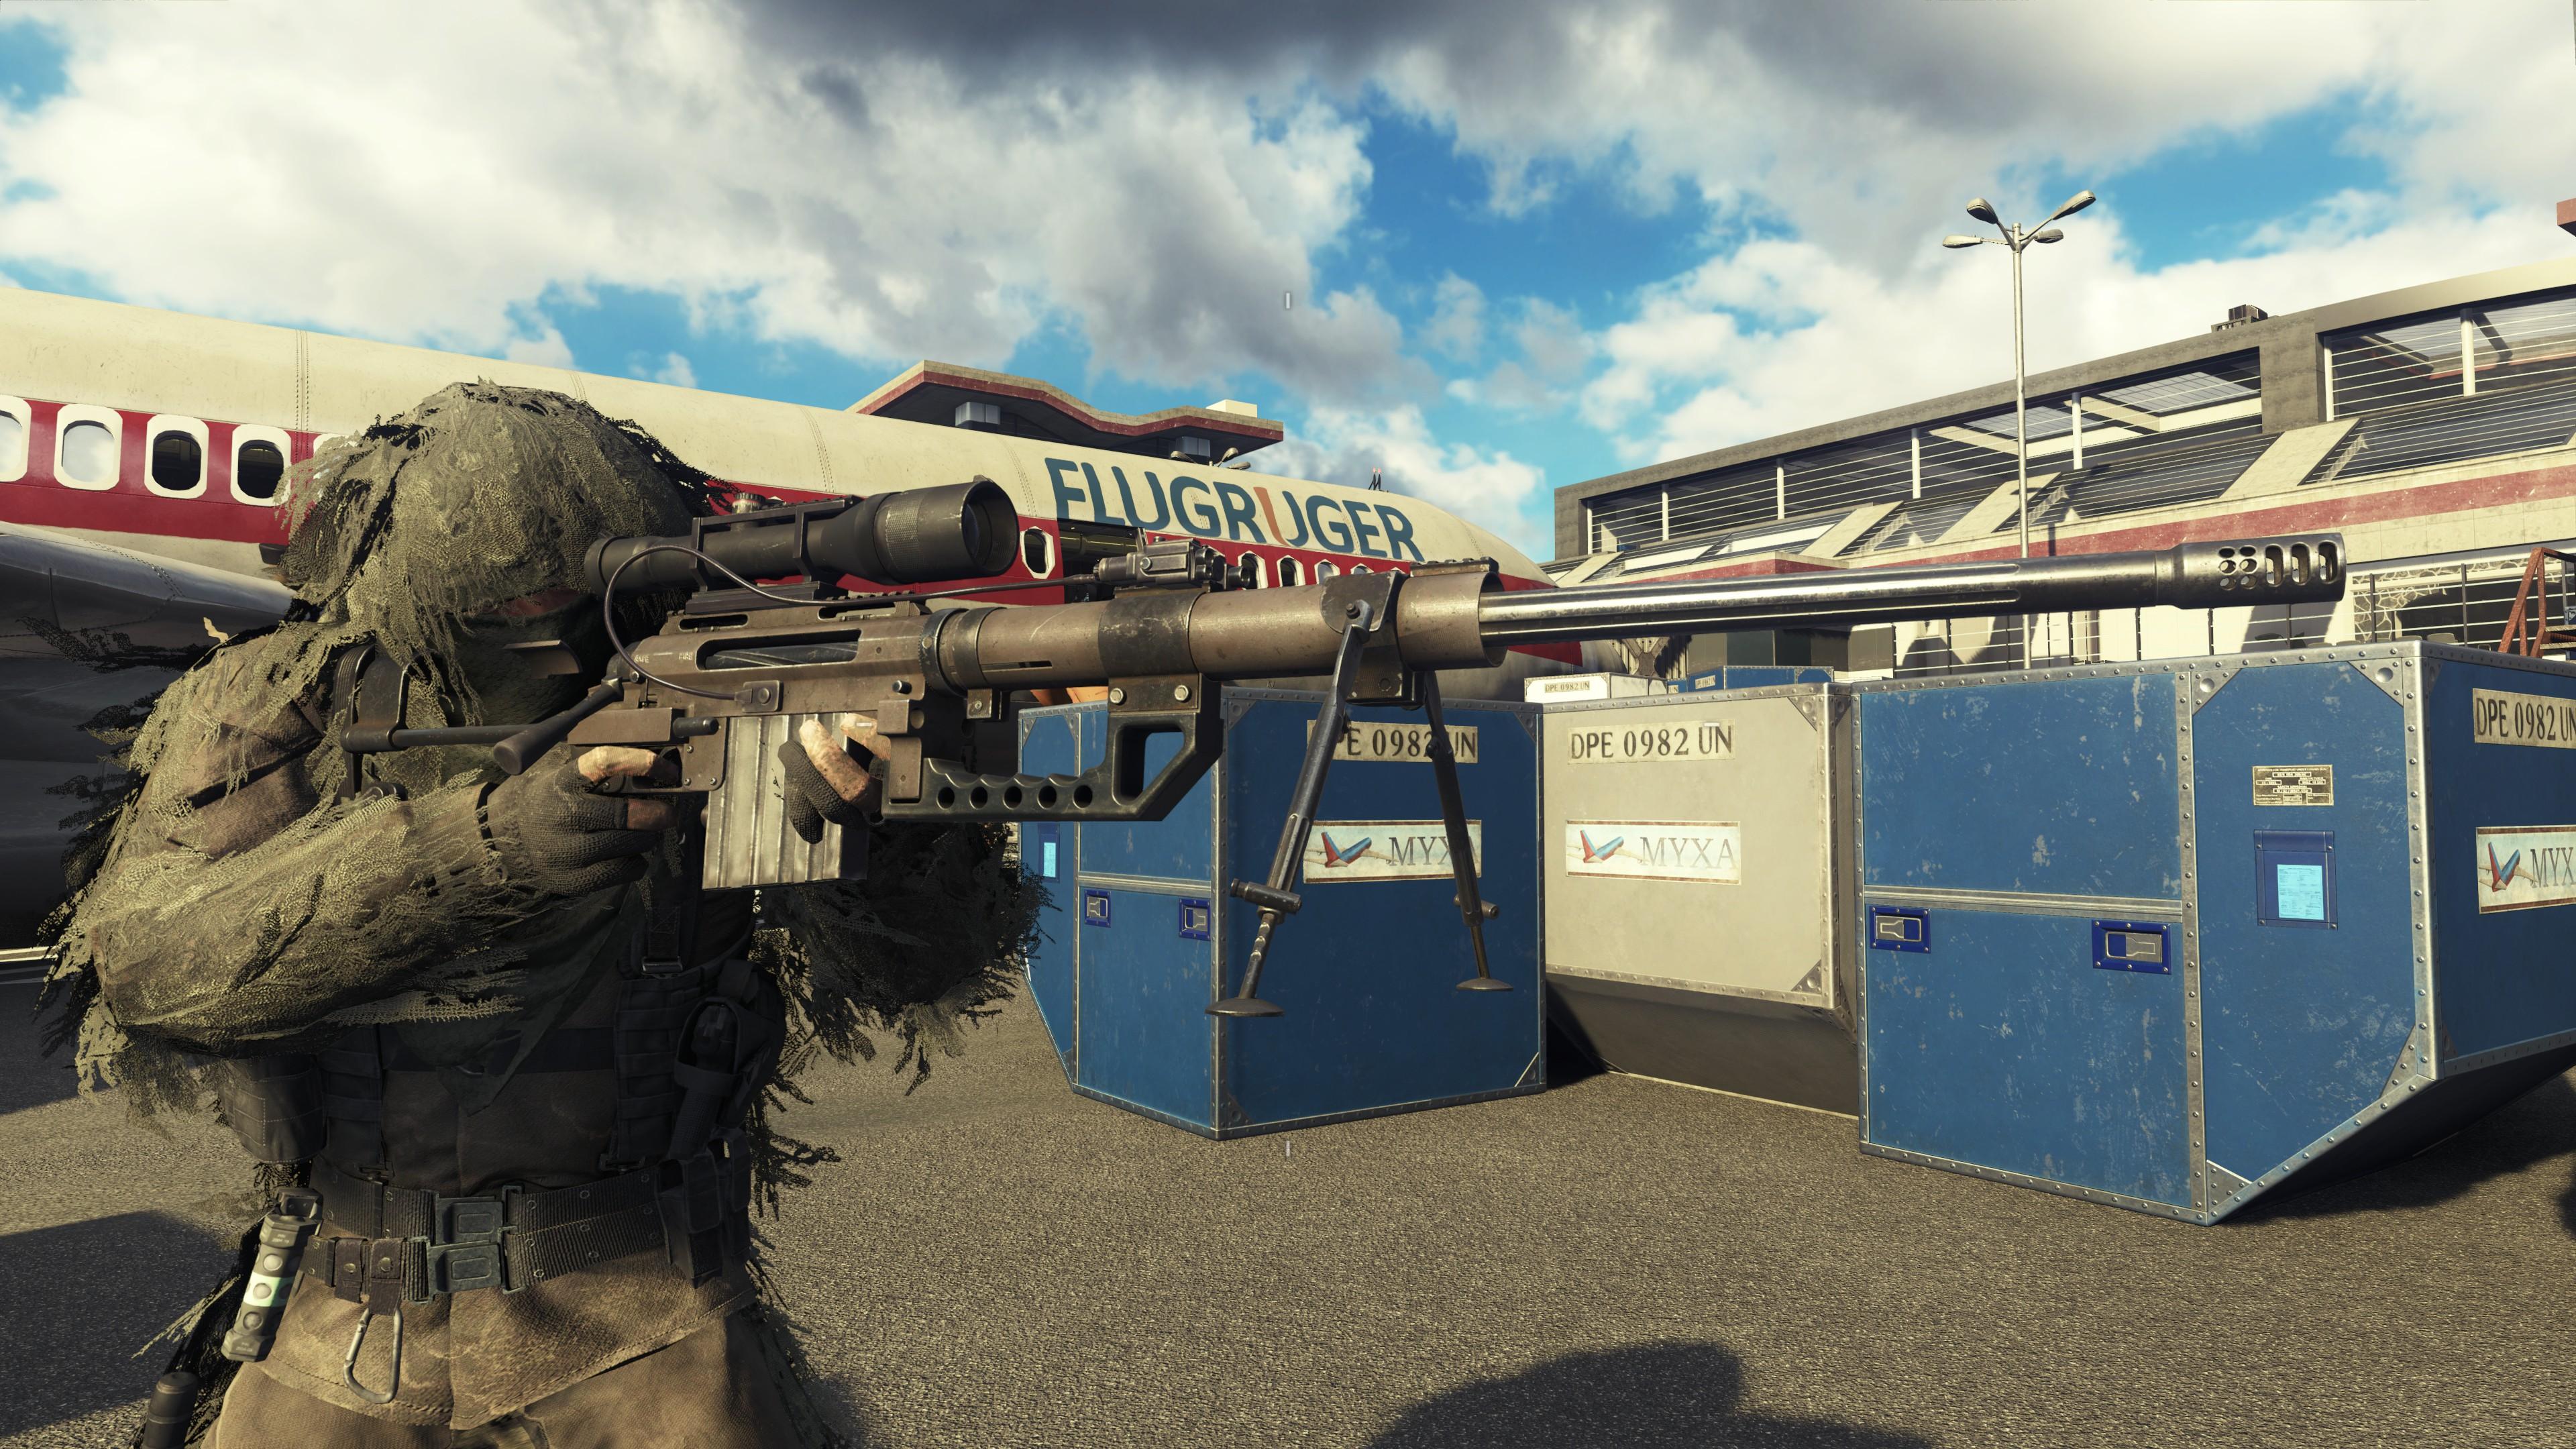 Call Of Duty: Modern Warfare 2 Remastered multiplayer mod in development